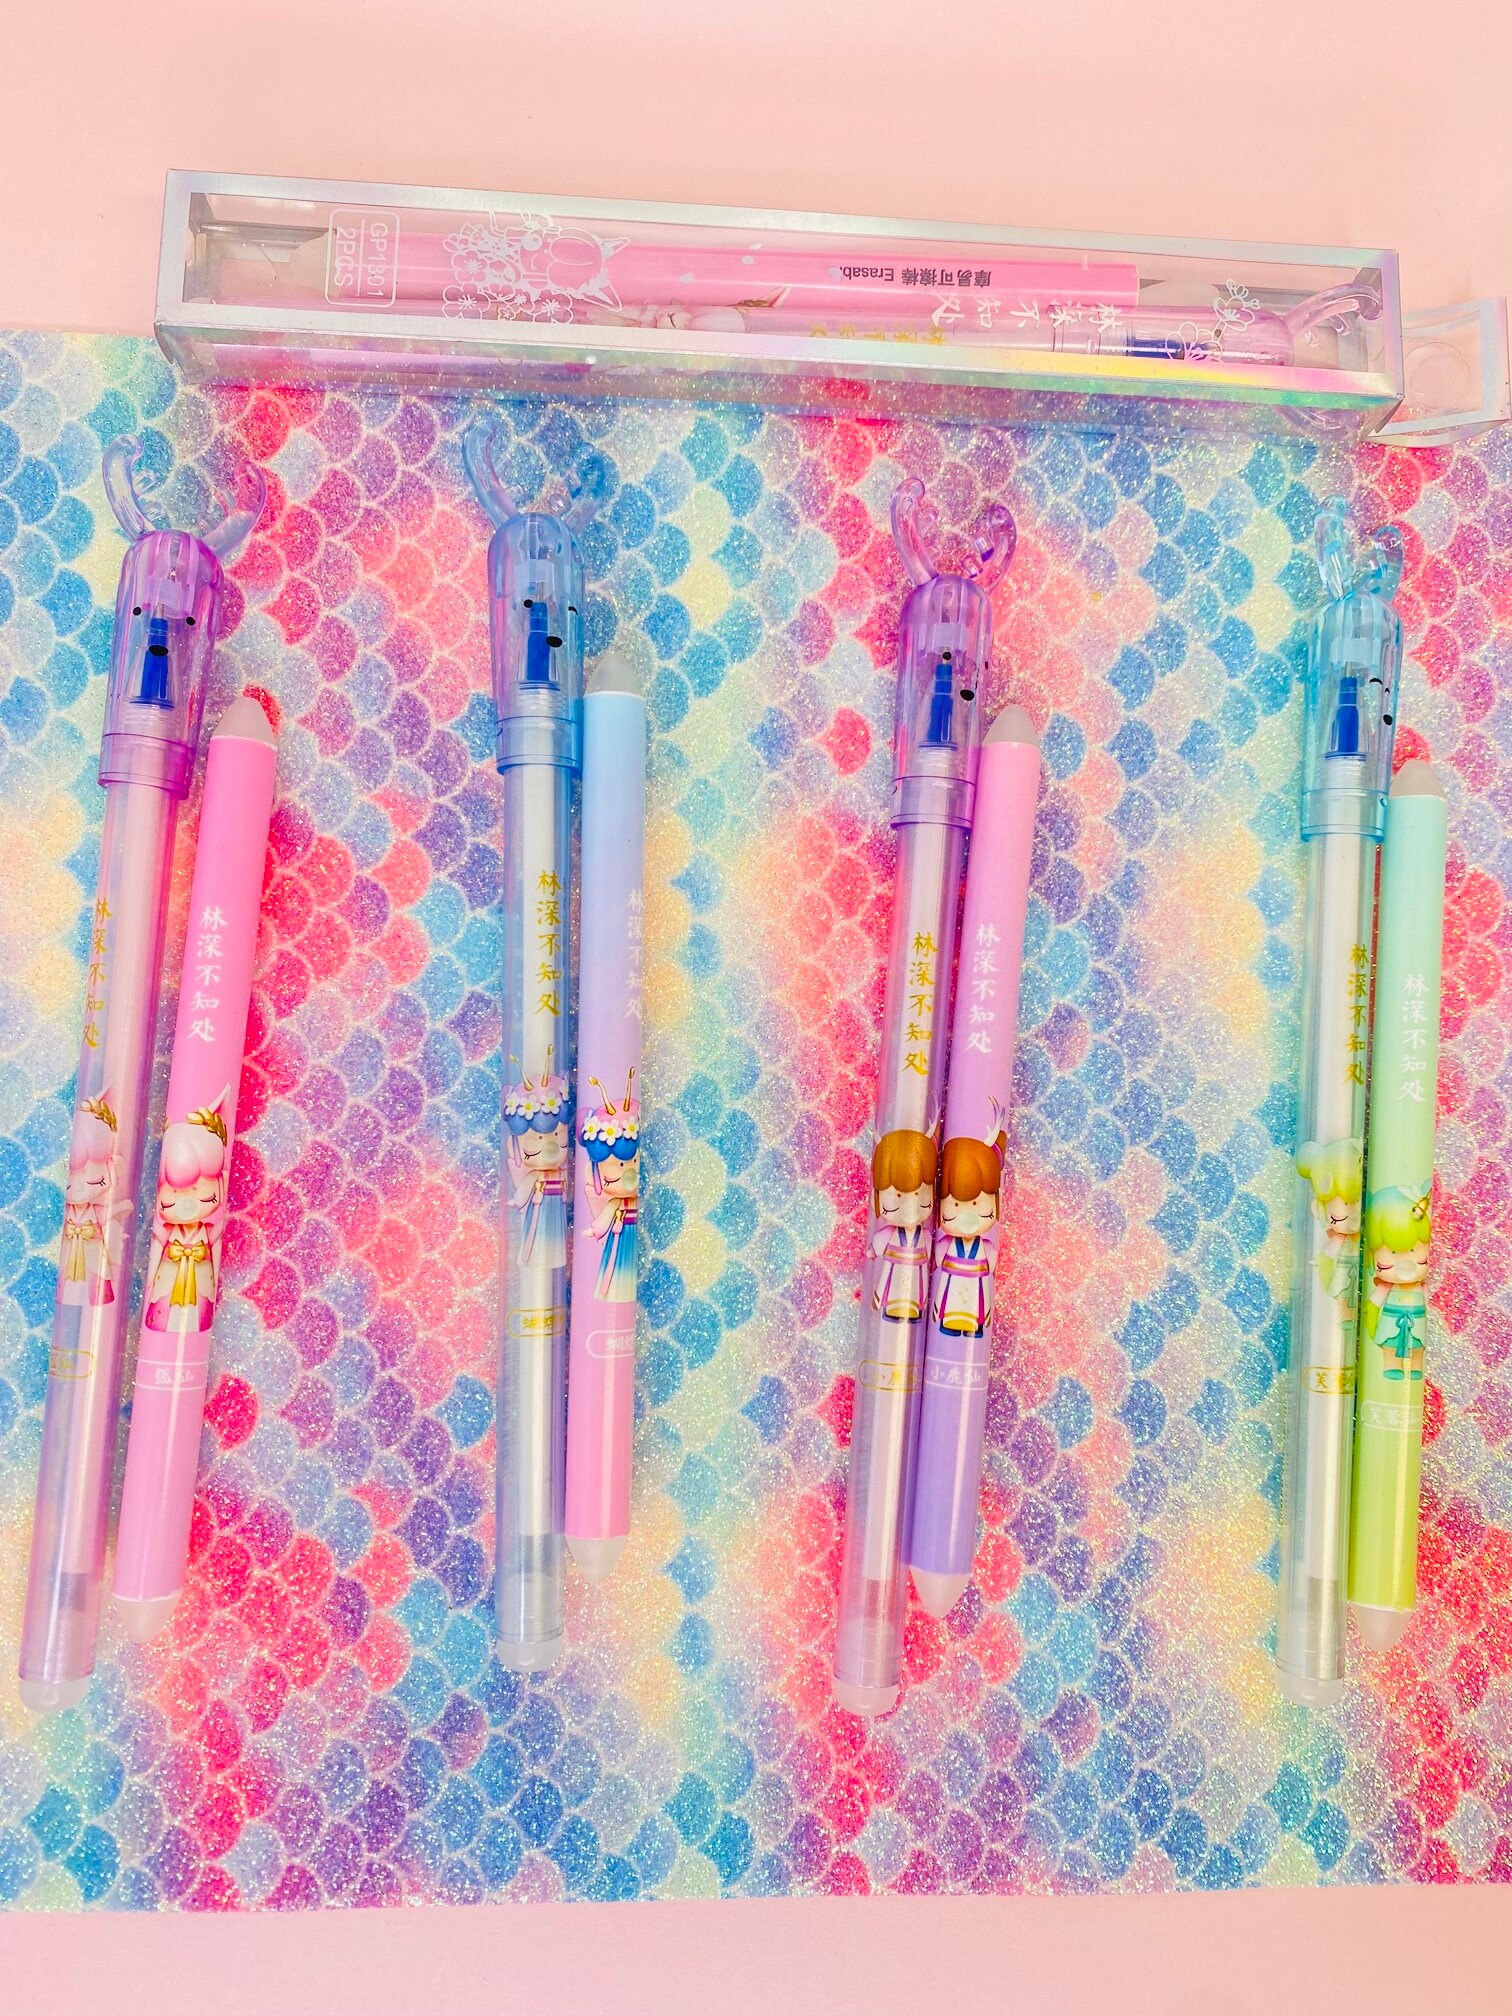 Aesthetic Cute Gel Pens, Black Ink Gel Pen Set, Sign Pen, Gel Pen